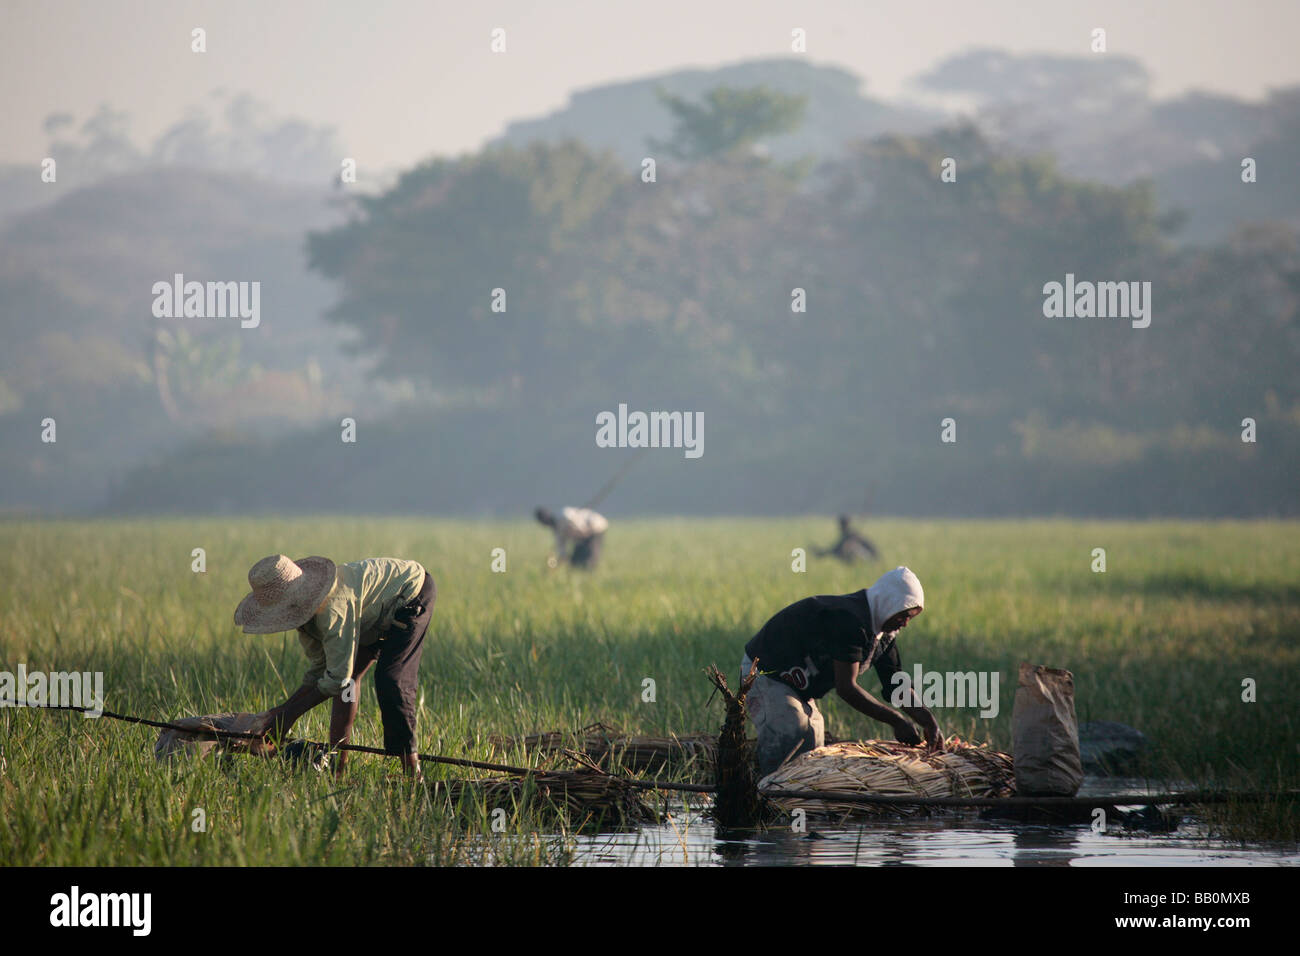 Men fishing from reed boats in Lake Awasa Ethiopia Stock Photo